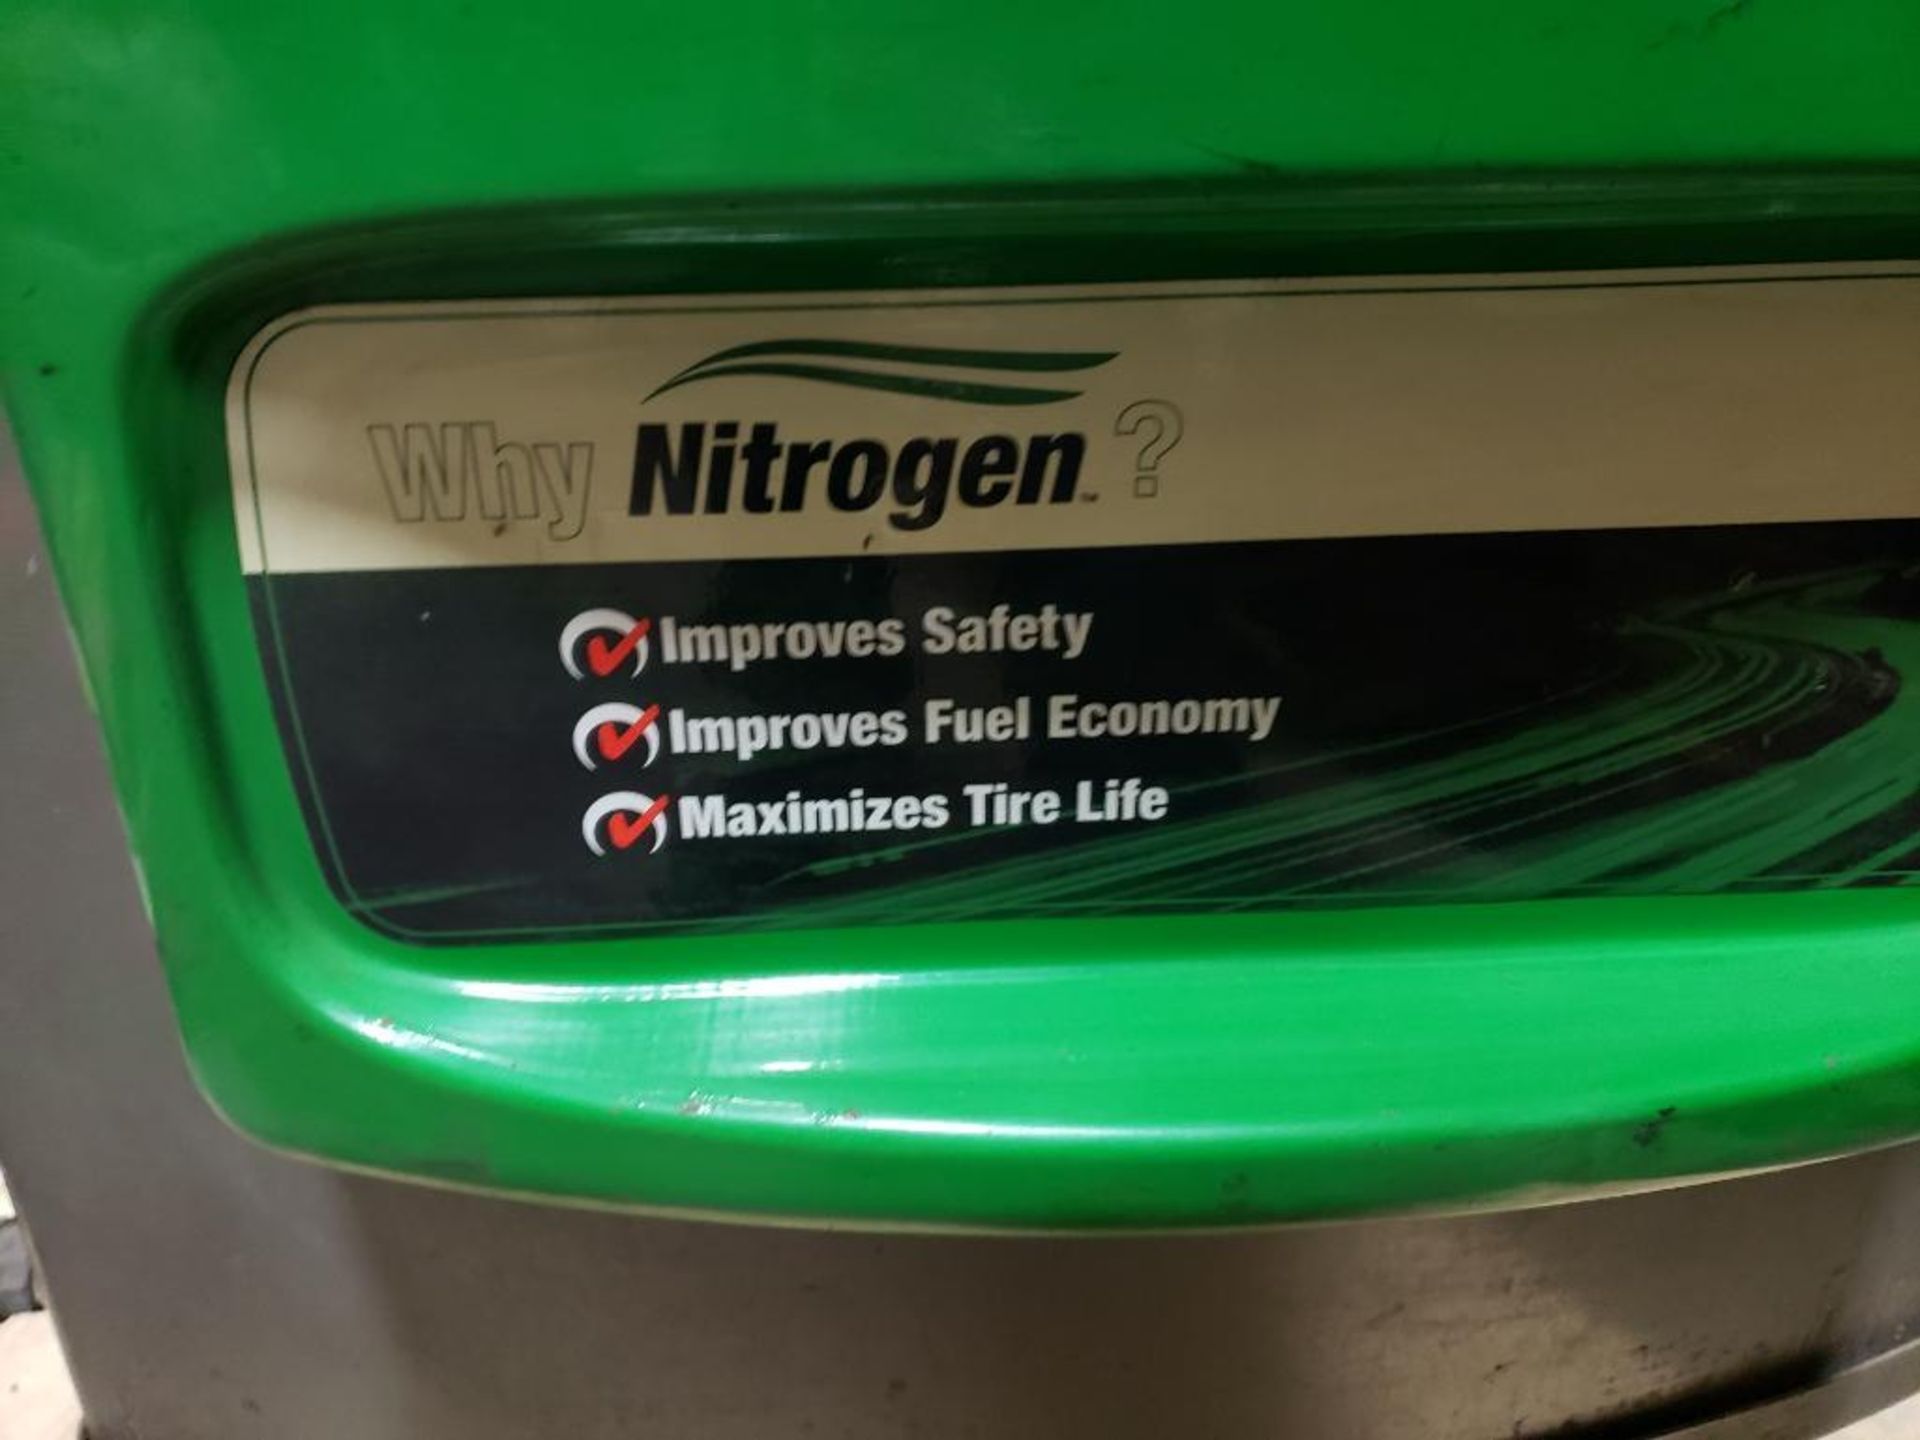 Ingersoll Rand nitrogen generator. Model N20406-PG. 175psig max. - Image 9 of 9